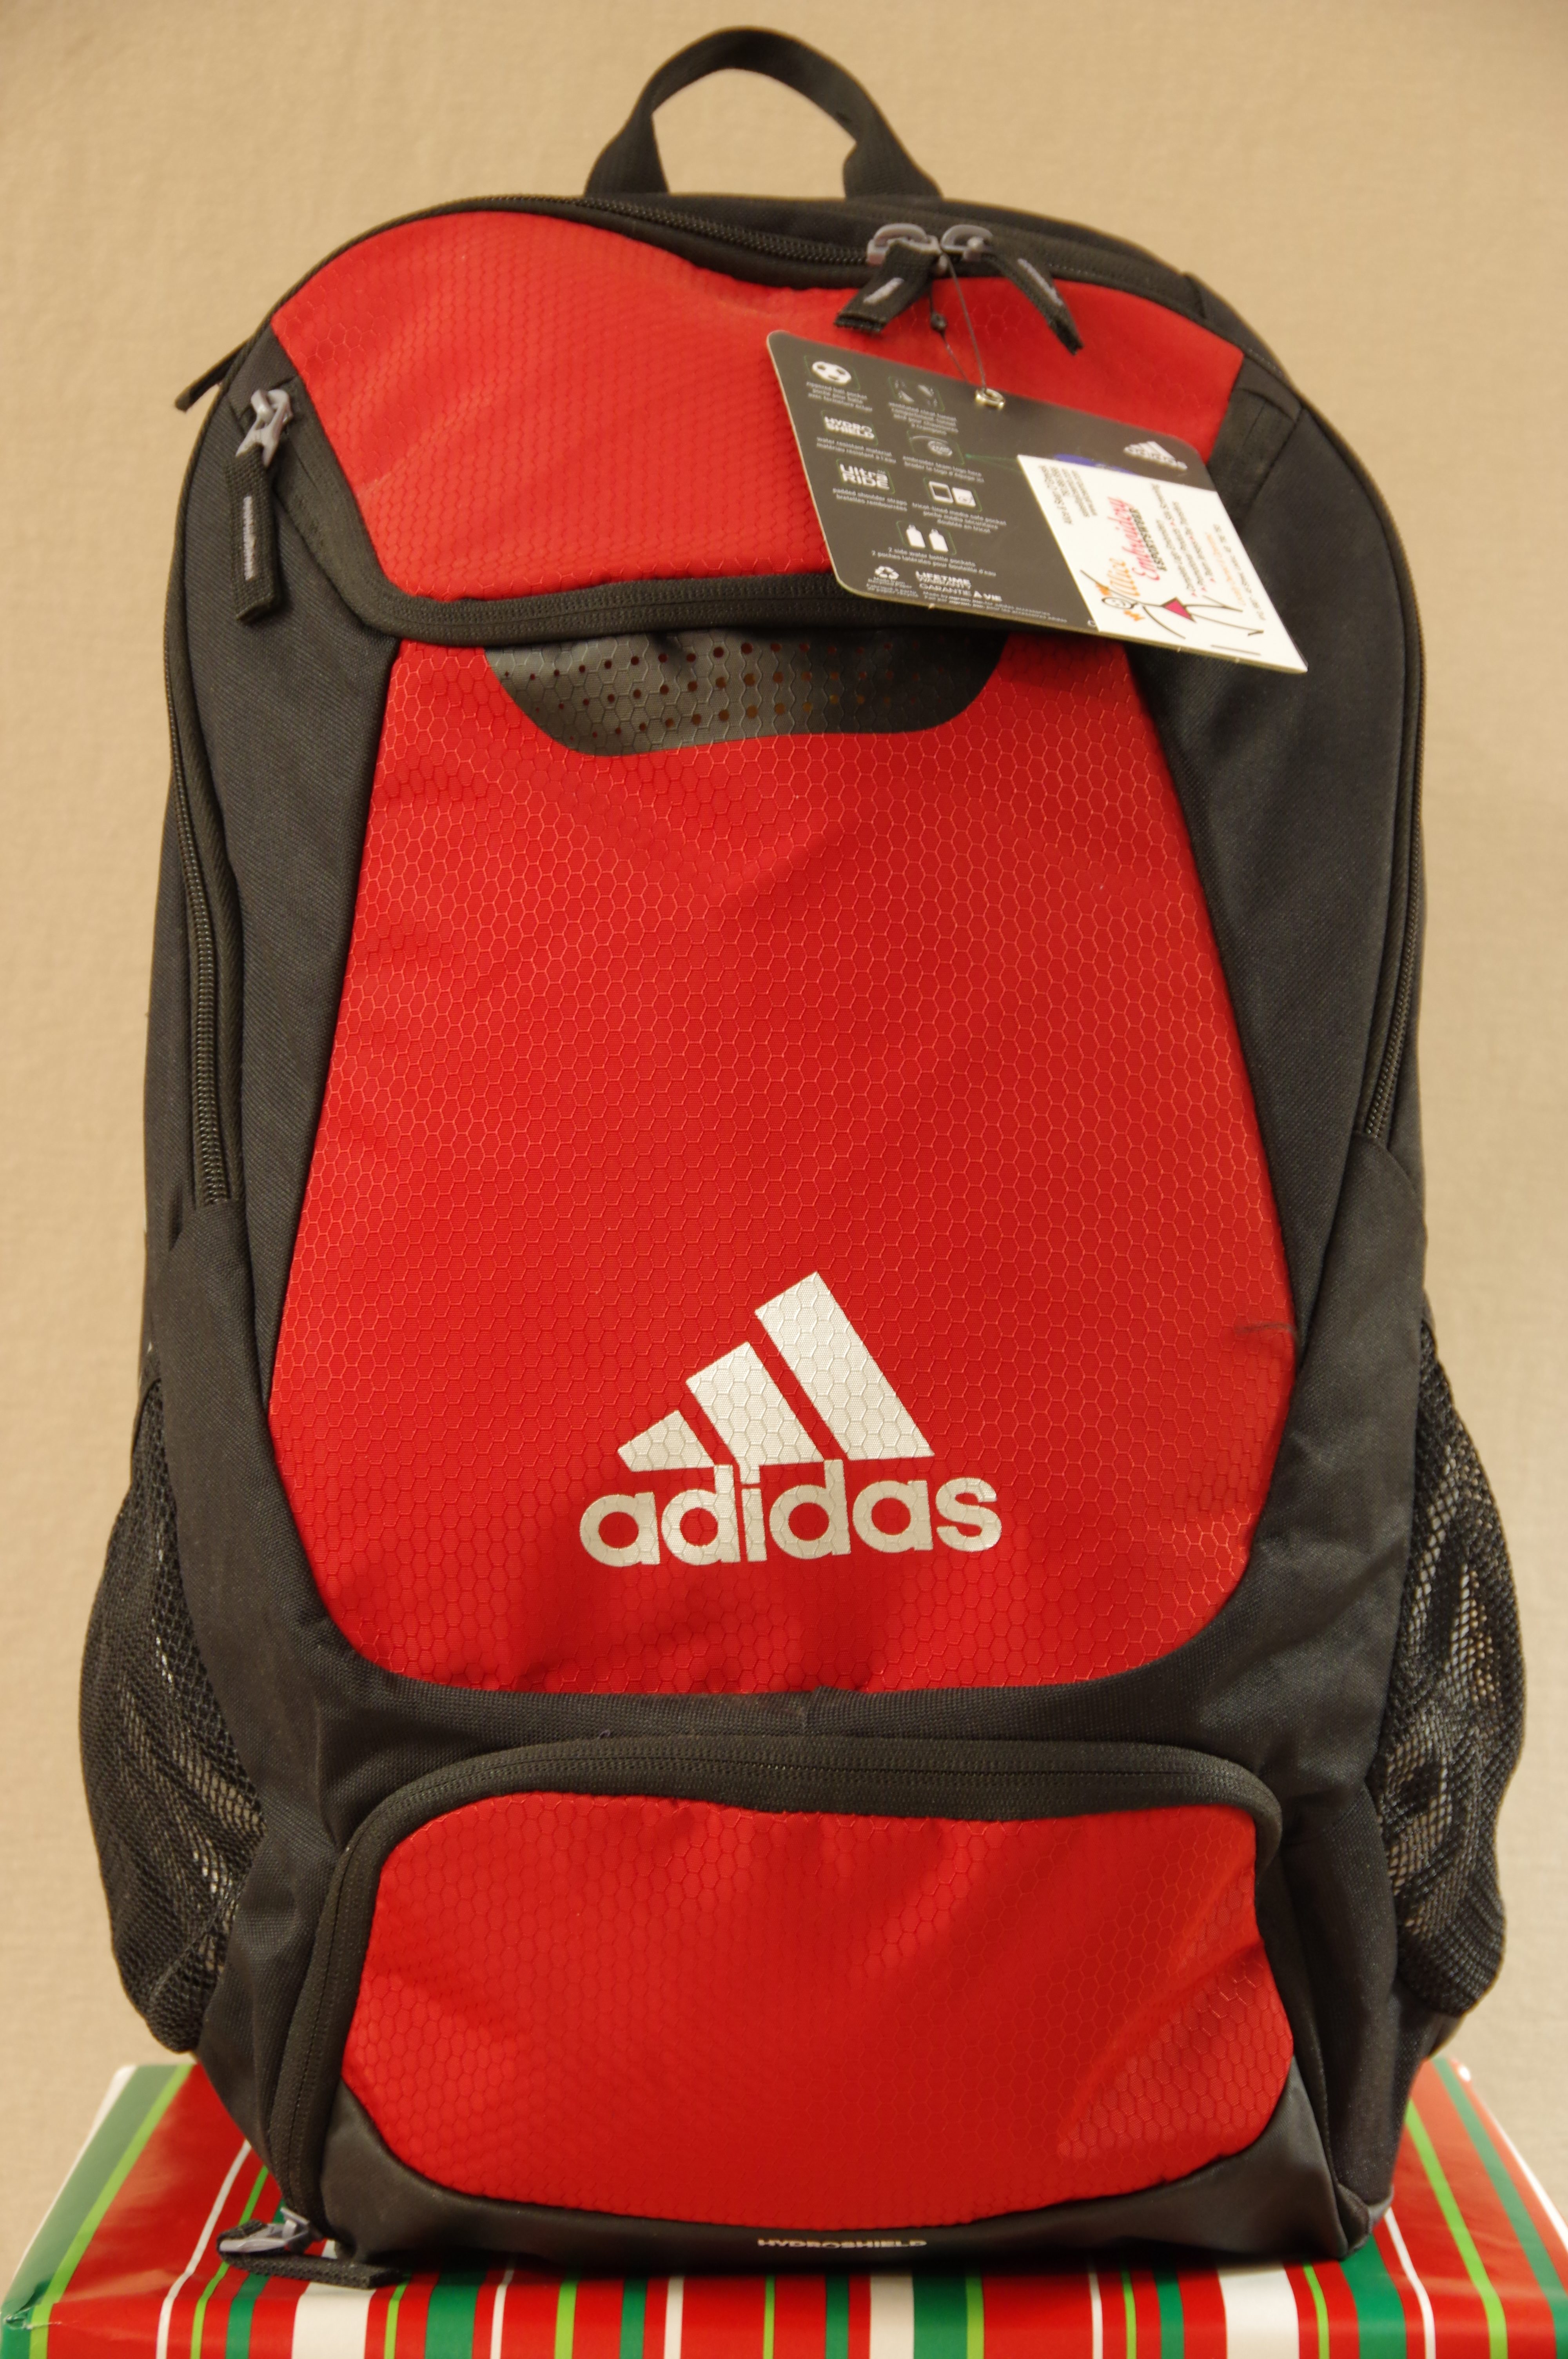 Adidas Soccer Backpack | Leduc Santa's Helpers